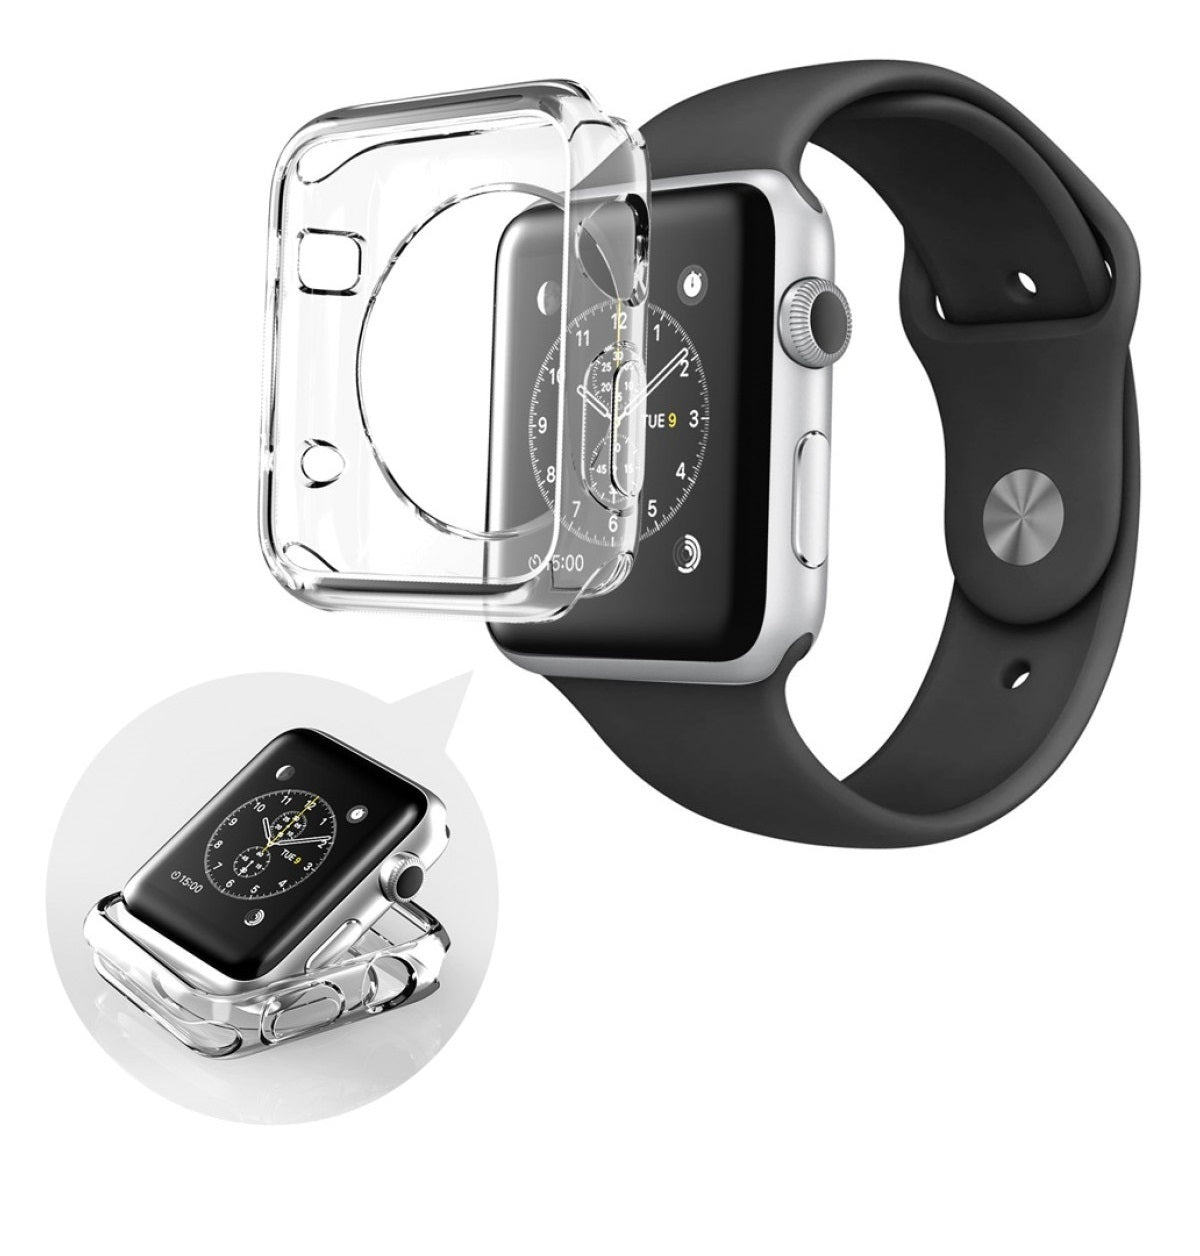 Capa Transparente Gel TPU Silicone para Apple Watch 42mm - Multi4you®